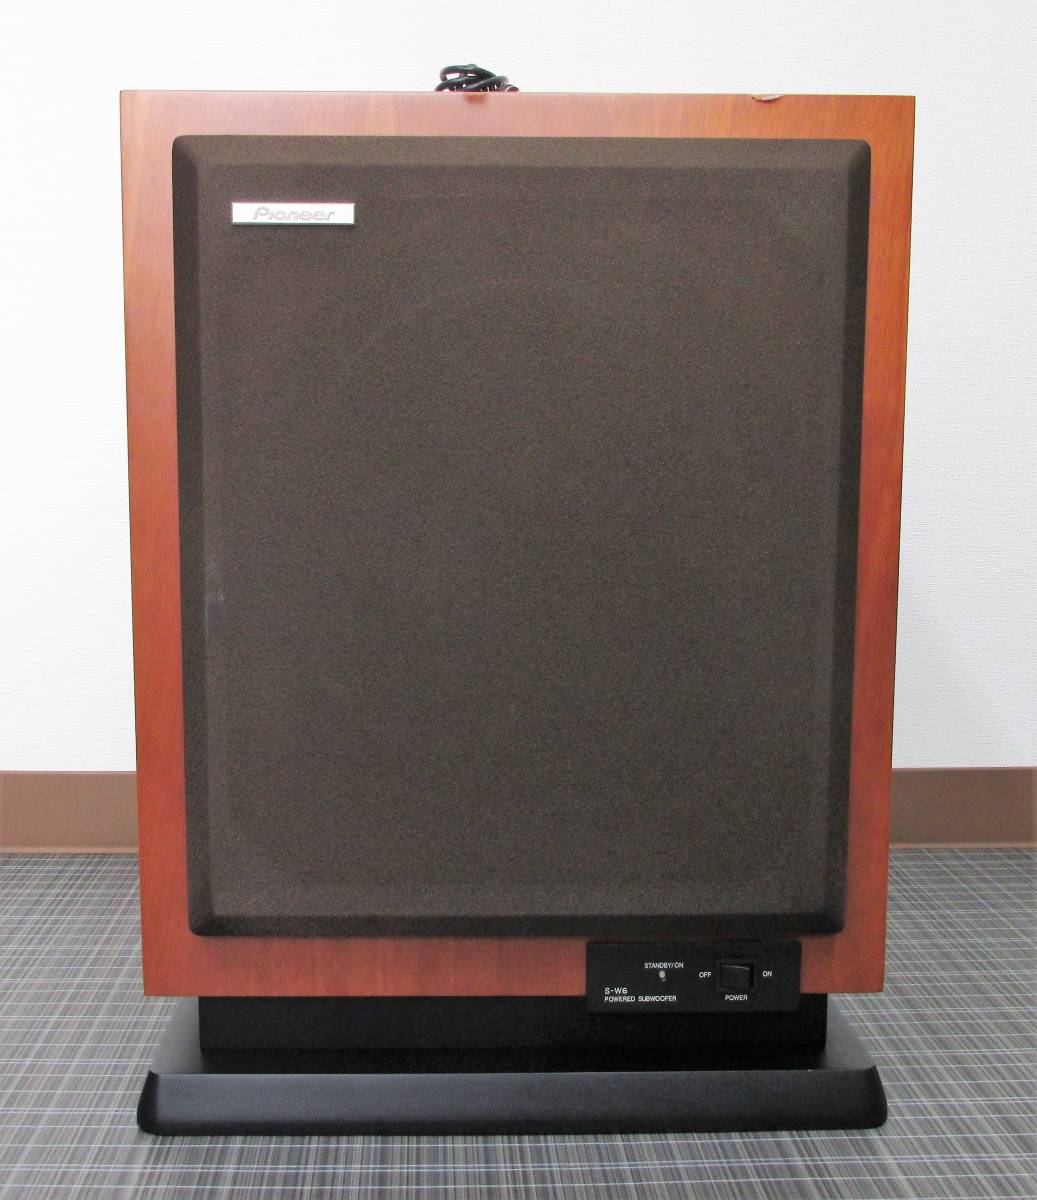 Pioneer Pioneer 5.1ch speaker (S-W6,S-A3-LR,S-A5C,S-A5,S-A5) speaker